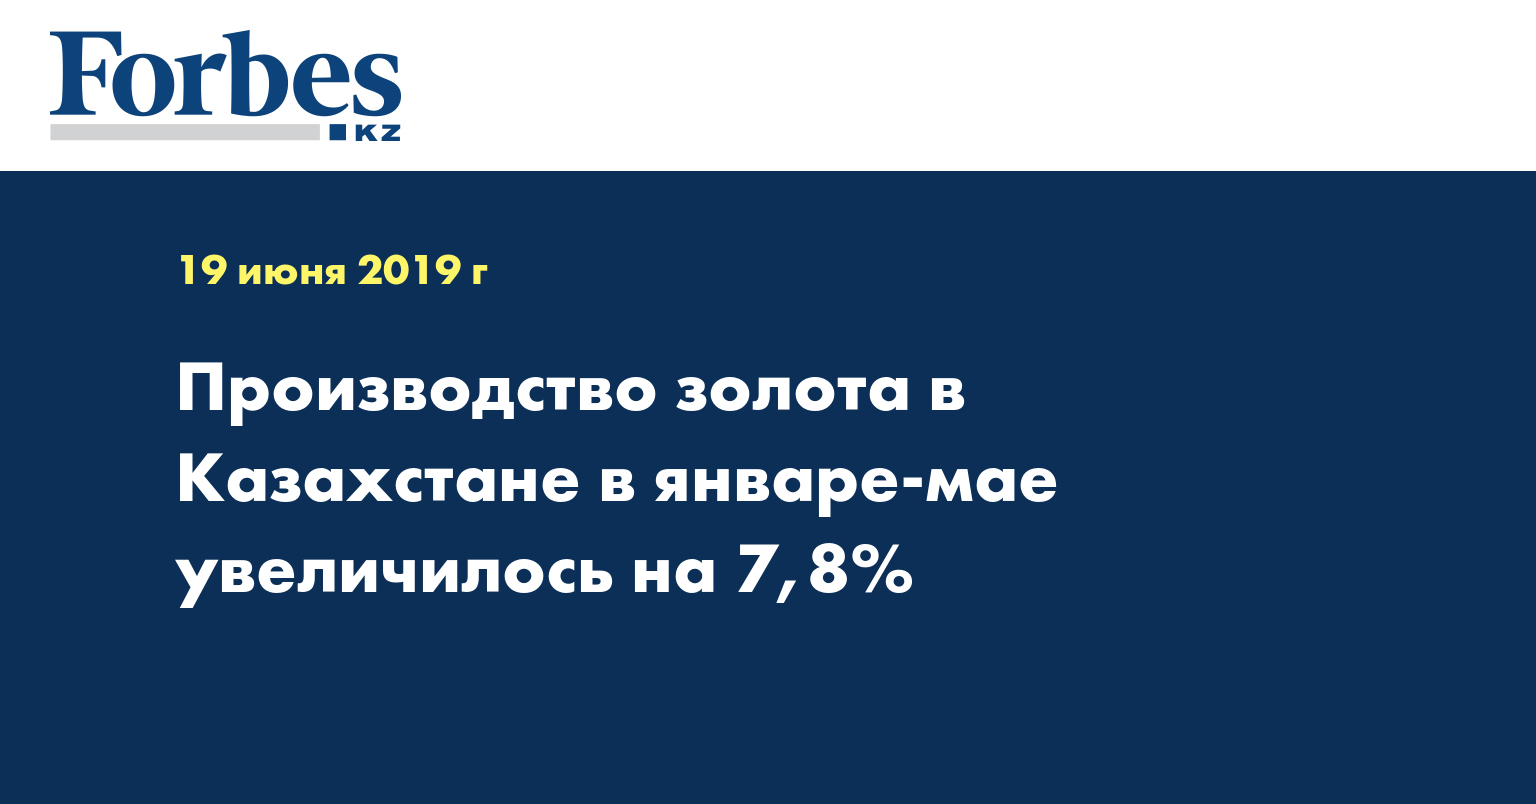 Производство золота в Казахстане в январе-мае увеличилось на 7,8%